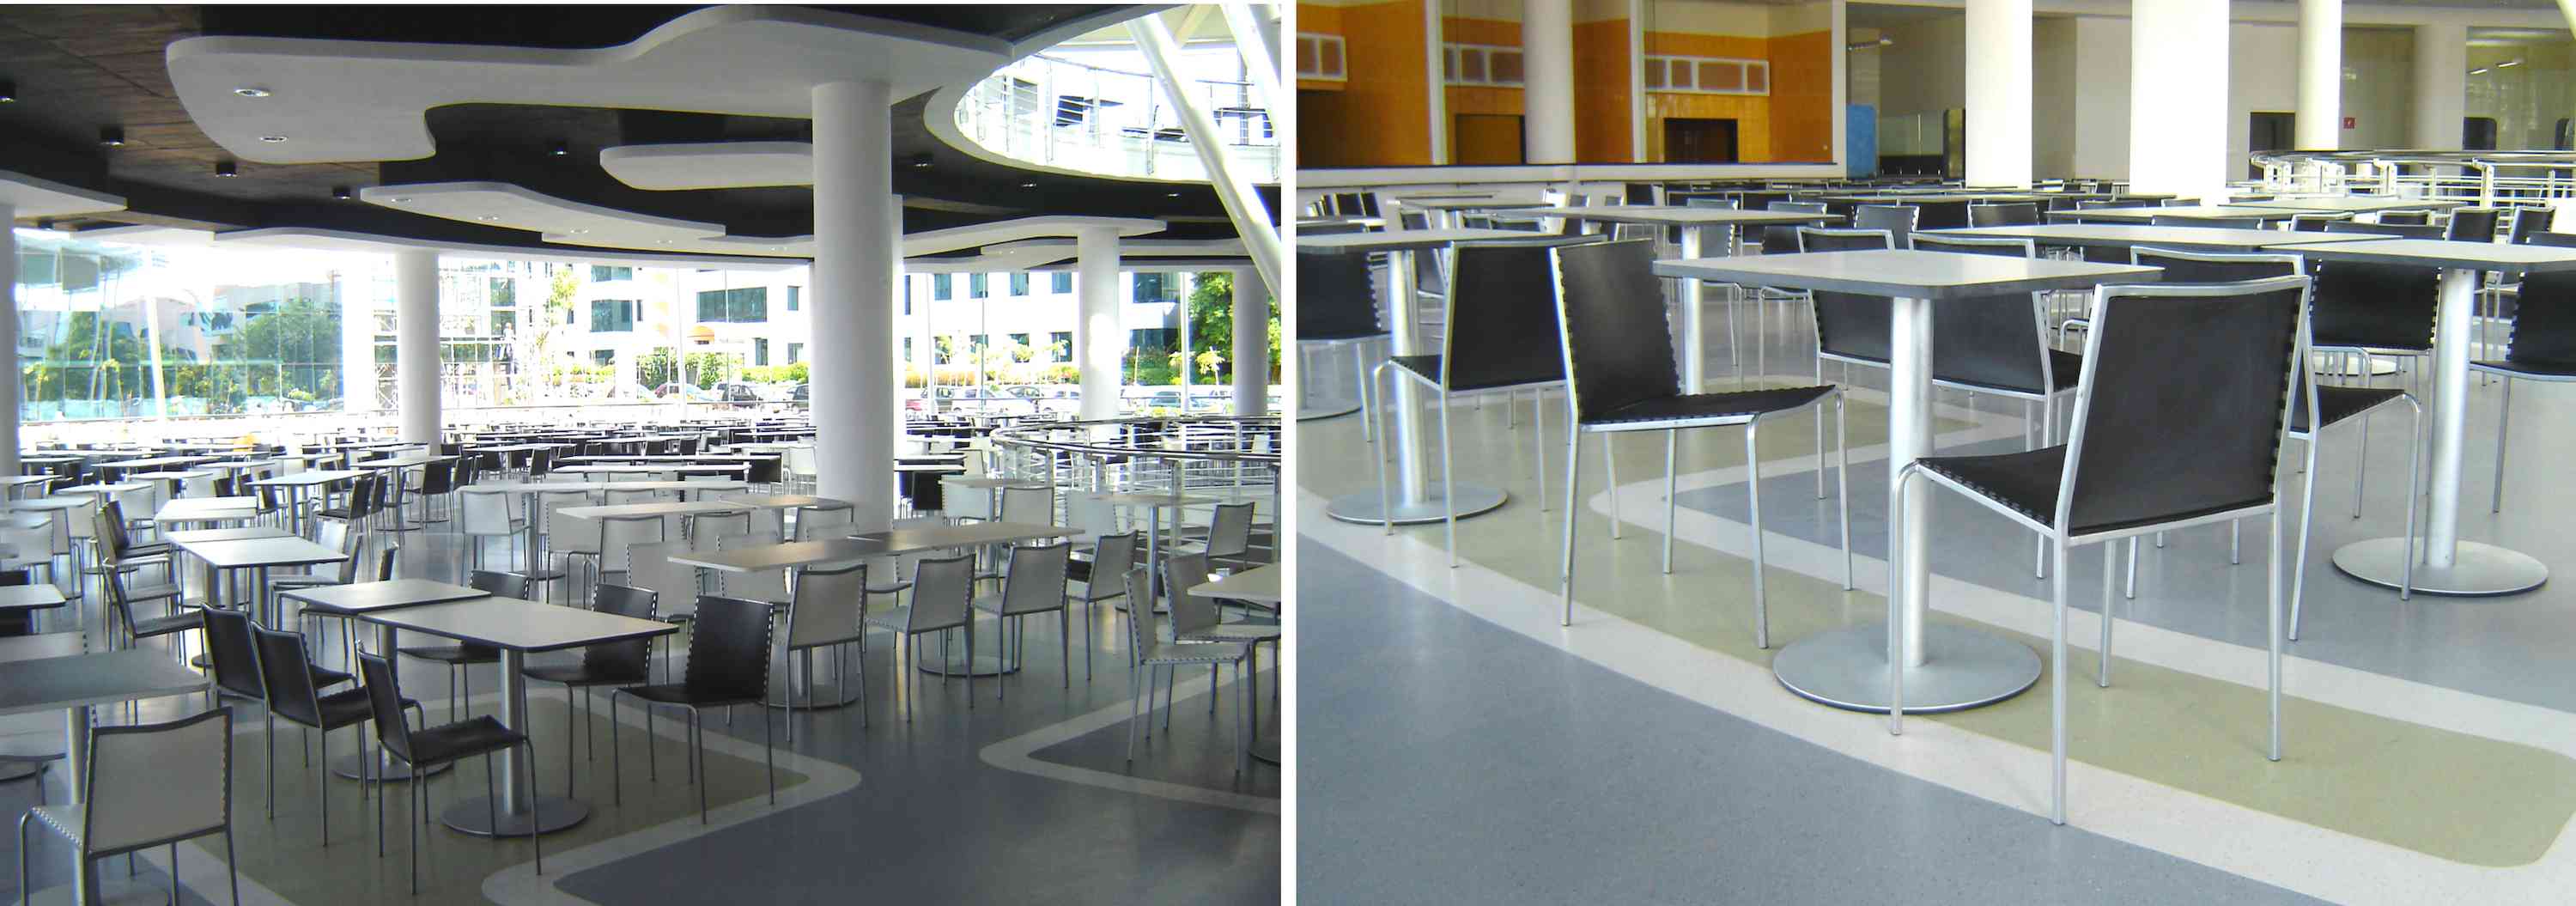 vinyl flooring bangalore, Infosys Ltd (food court) office flooring, vinyl flooring in bangalore